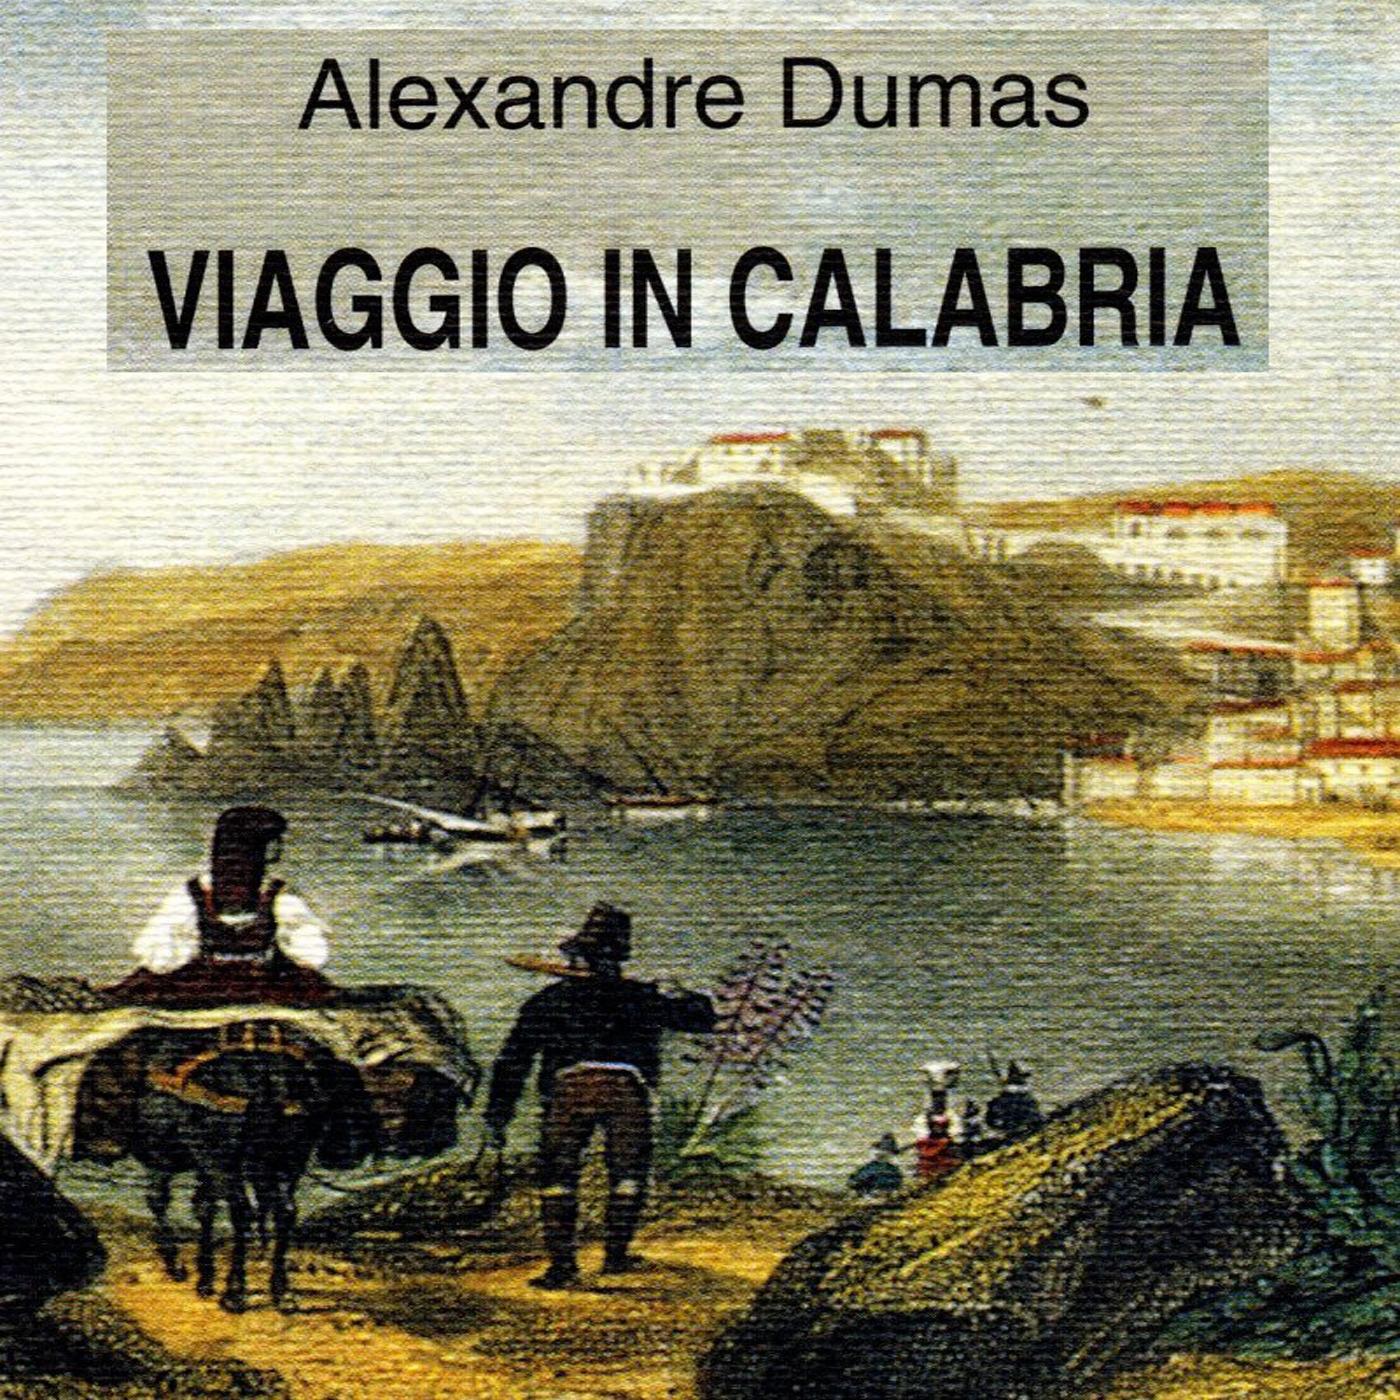 Viaggio in Calabria con Alessandro Dumas